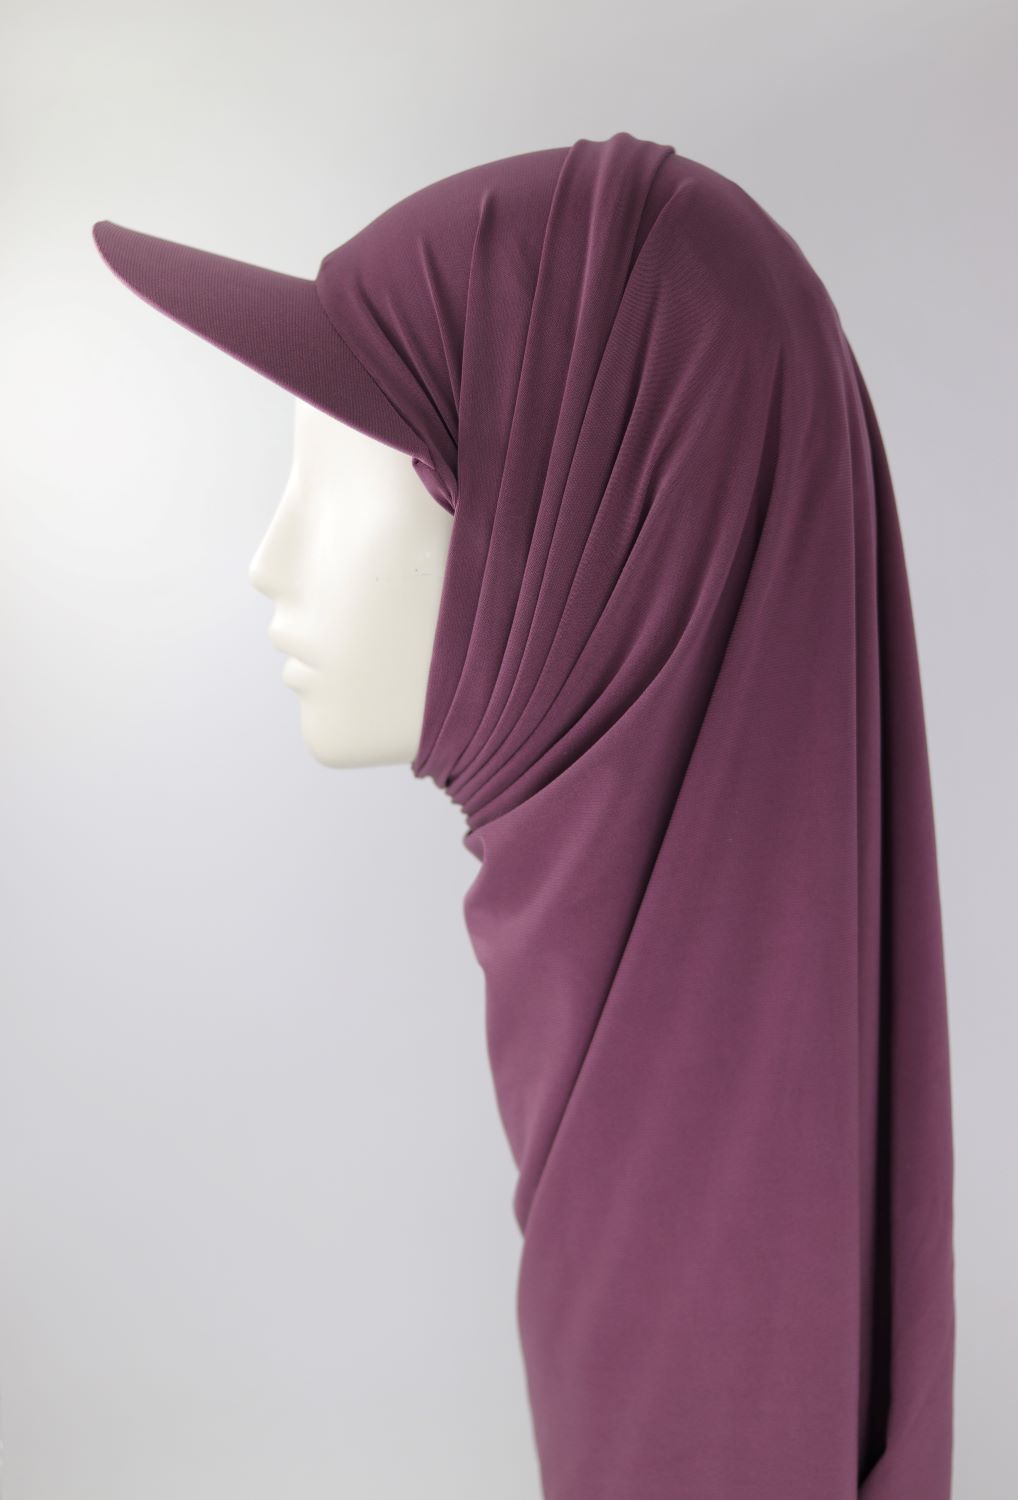 Cap Hijab Voile Fashion